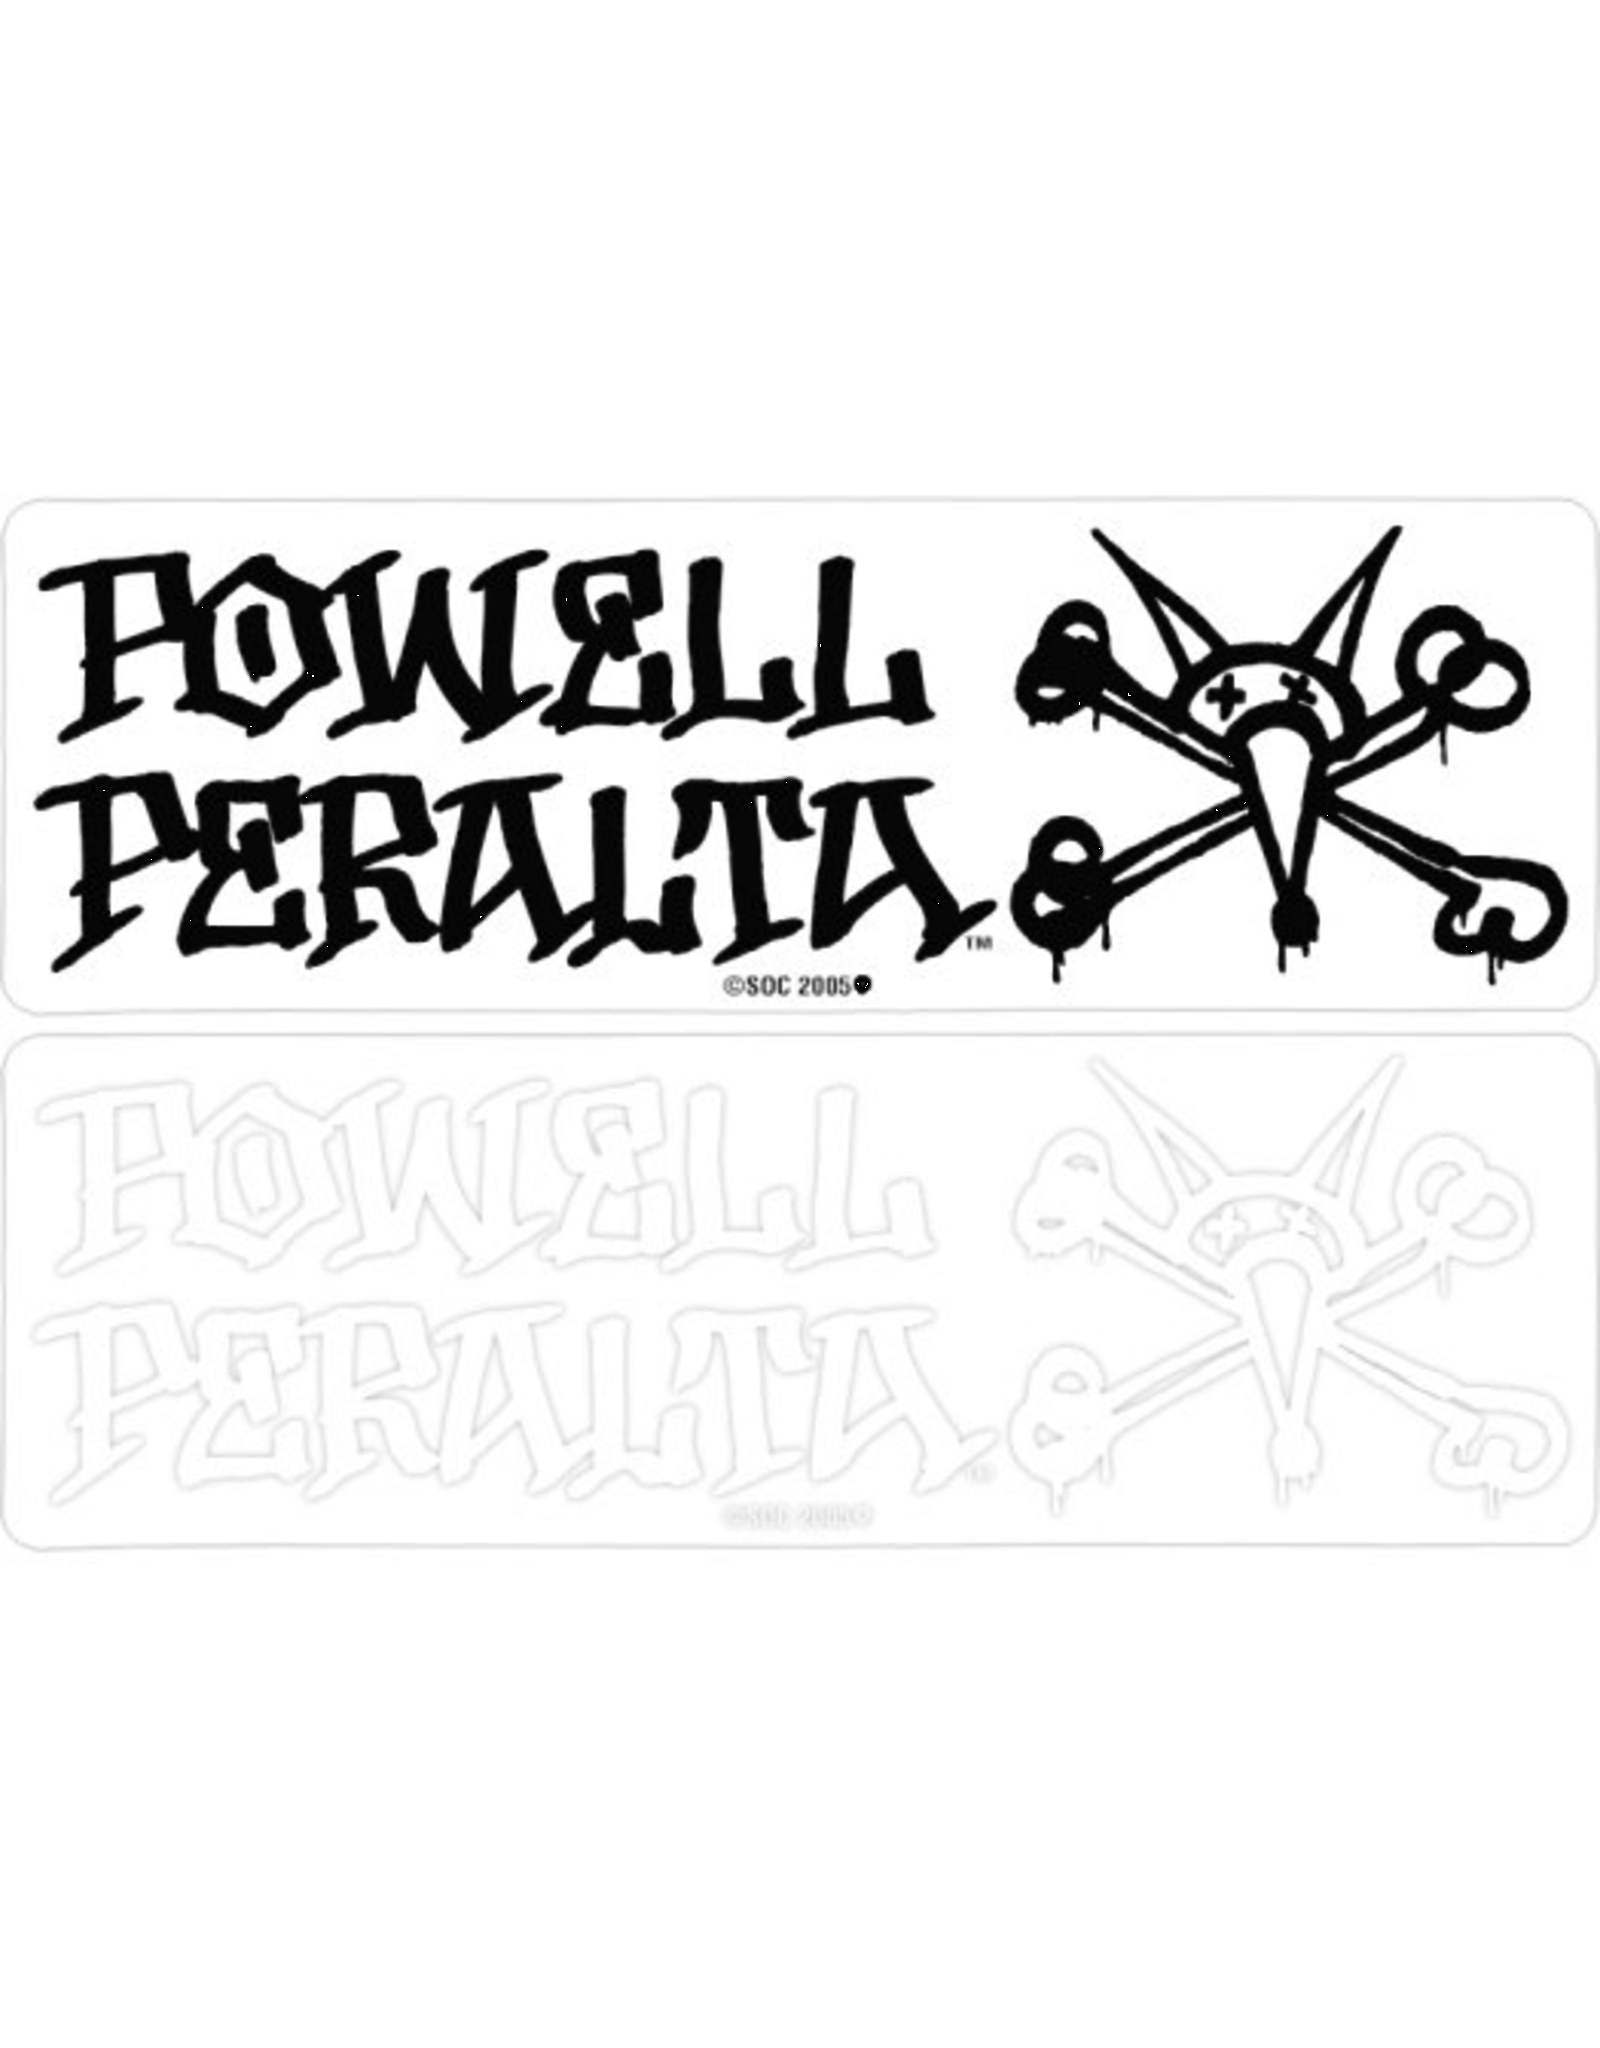 POWELL Powell Peralta Vato Rat Sticker